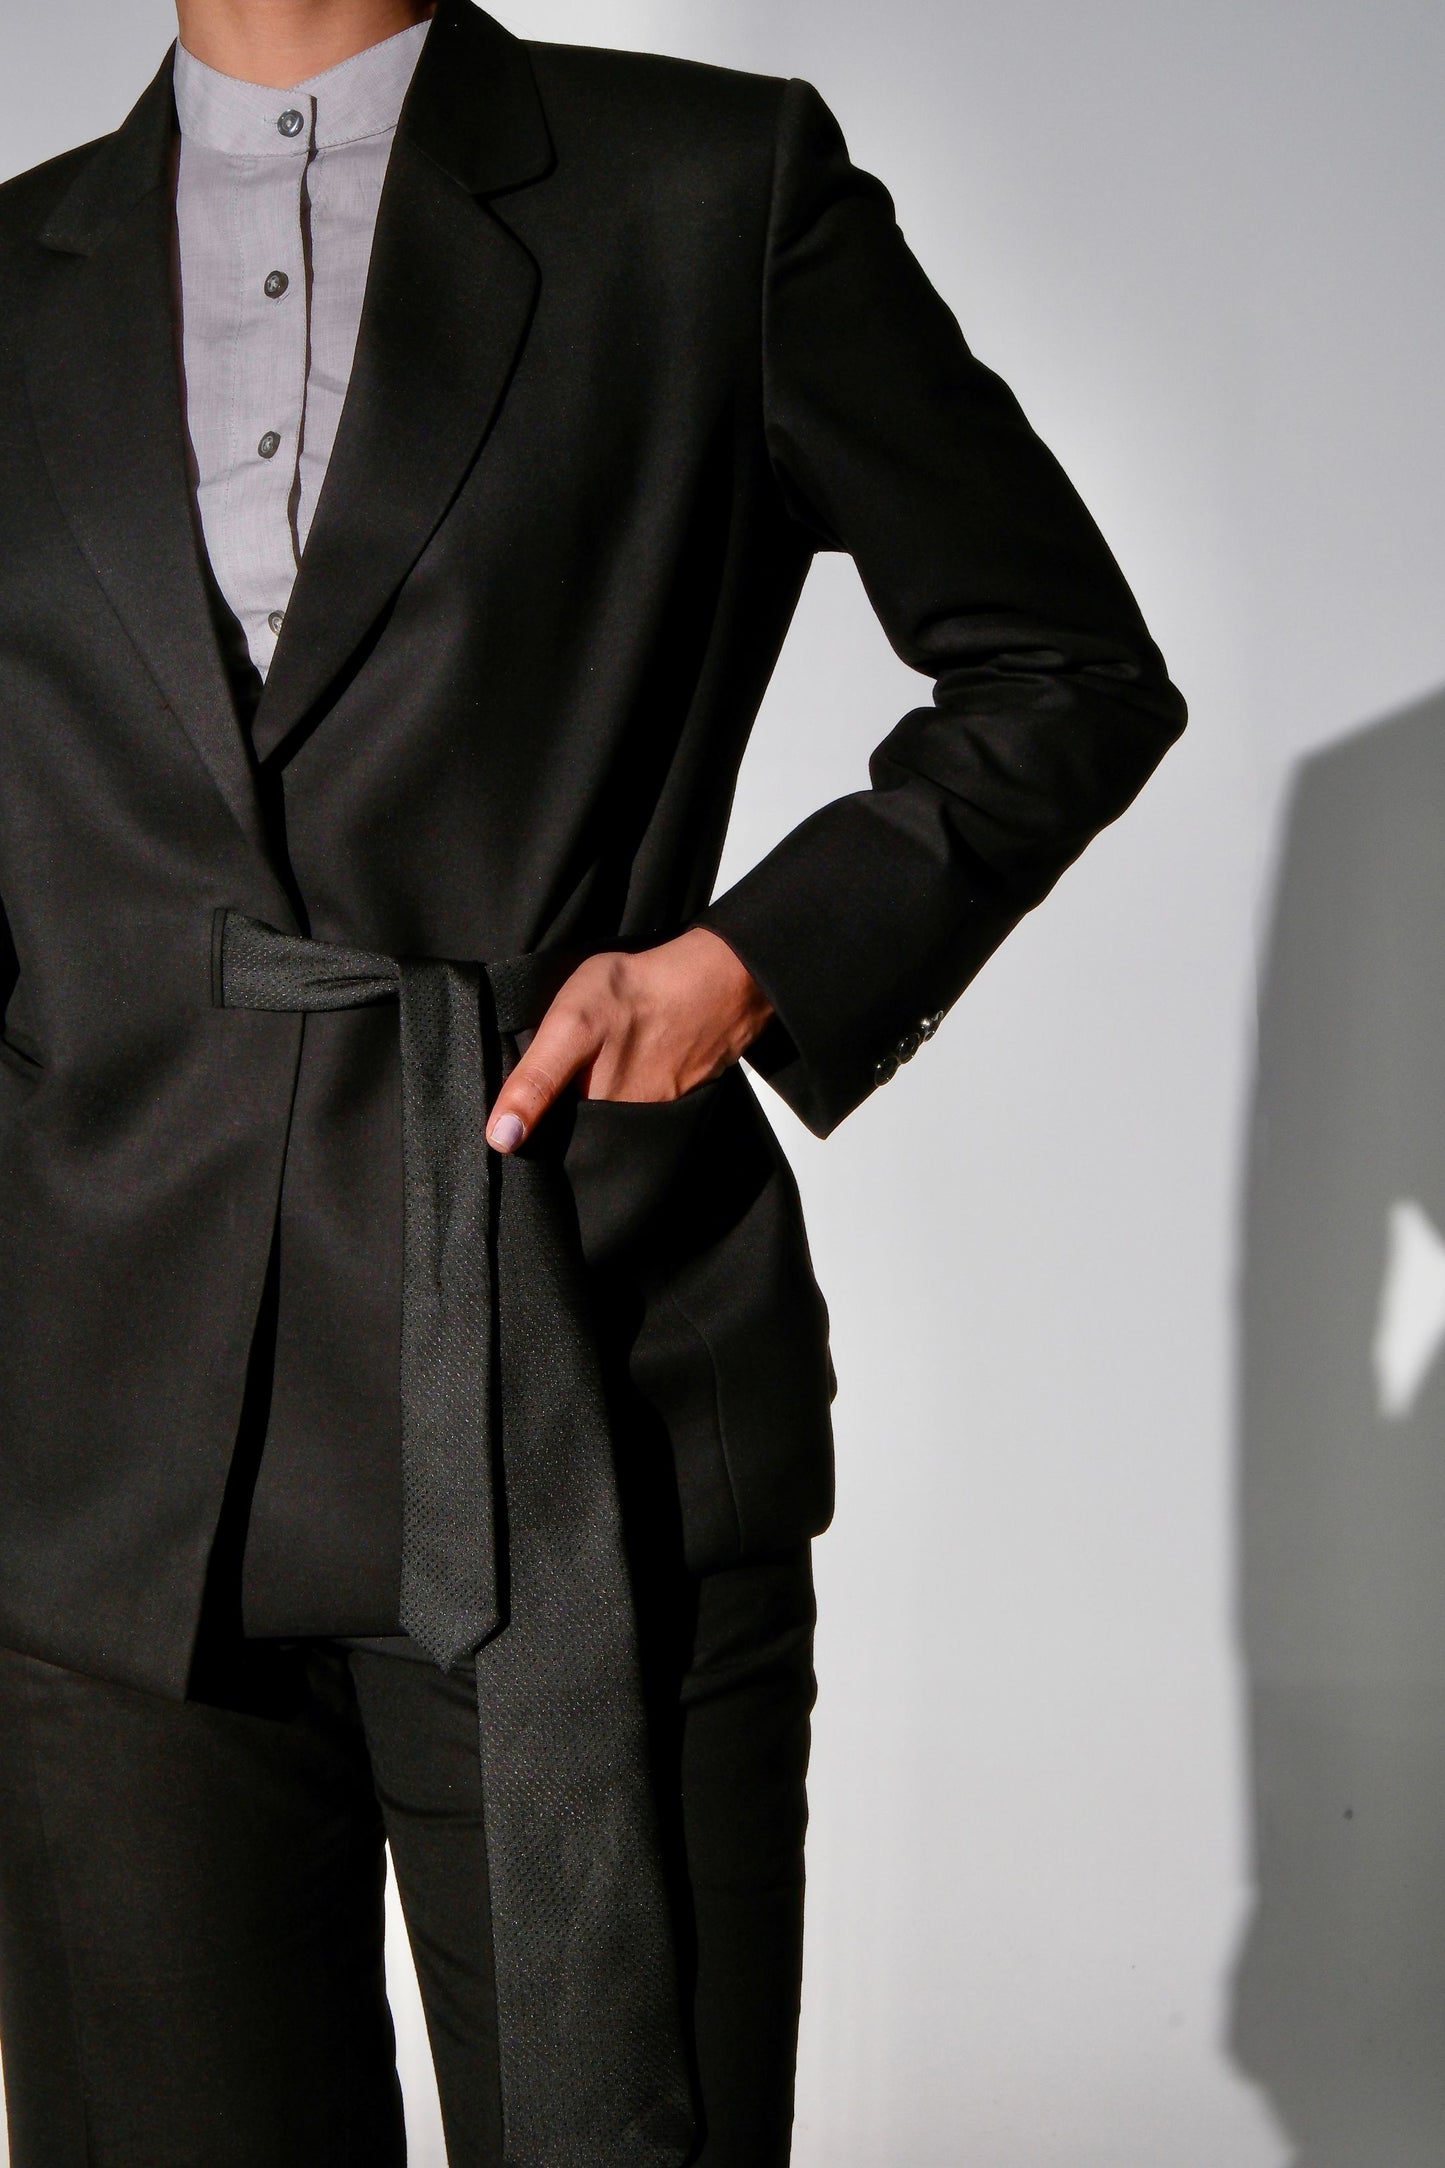 Tie Up Business Suit in Black